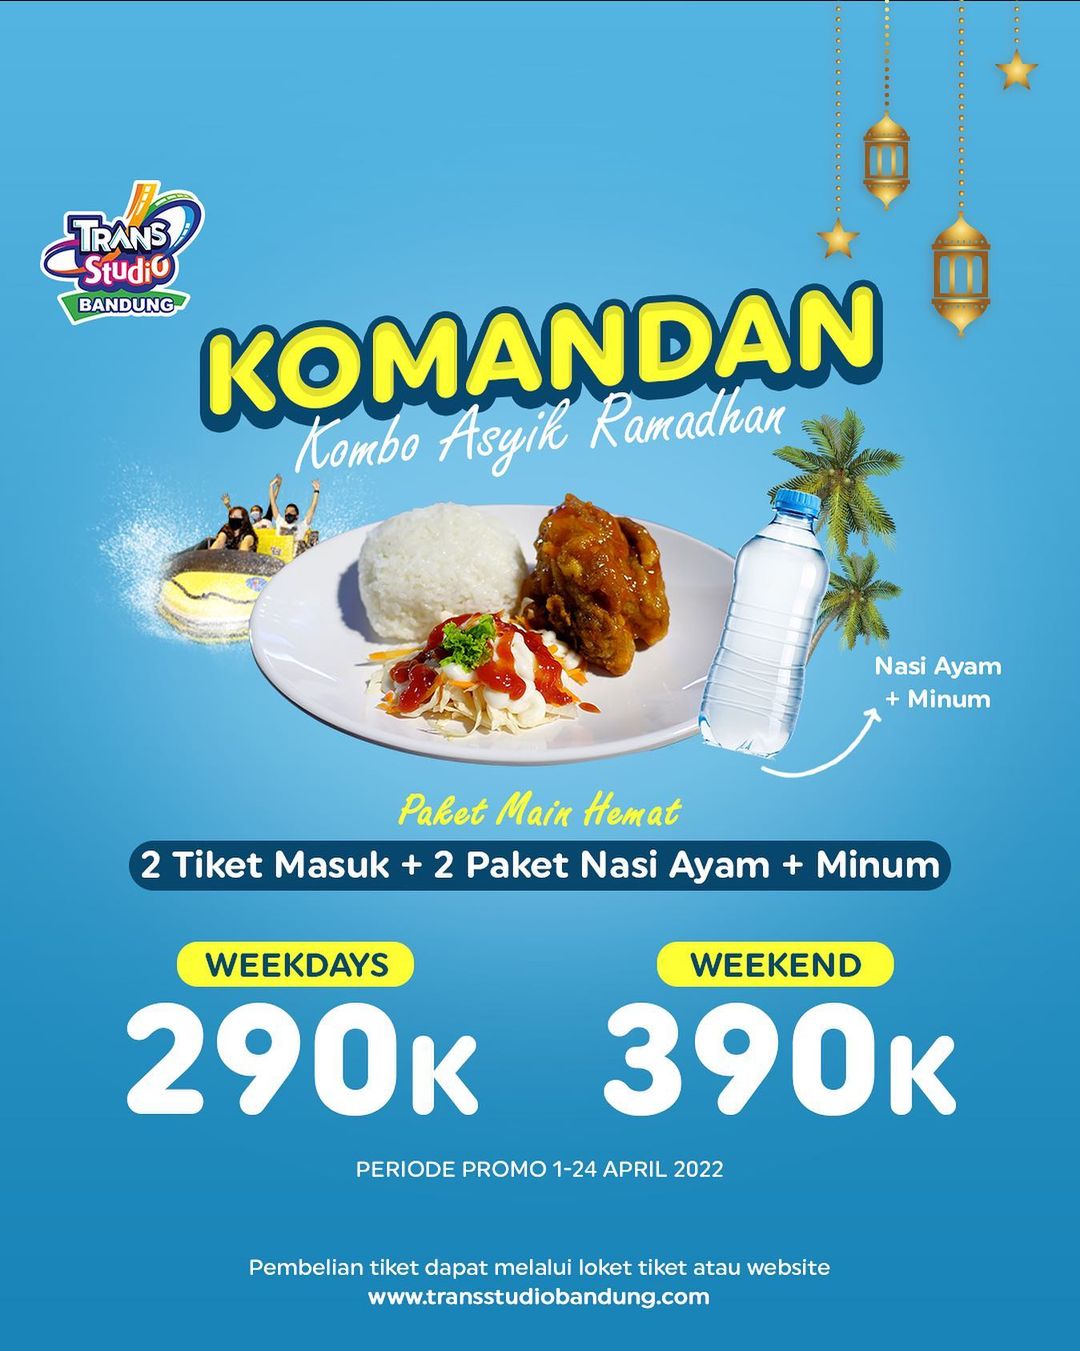 Promo TRANS STUDIO BANDUNG Paket KOMANDAN / Kombo Asyik Ramadhan - Mulai harga Rp. 290.000 sudah termasuk makanan